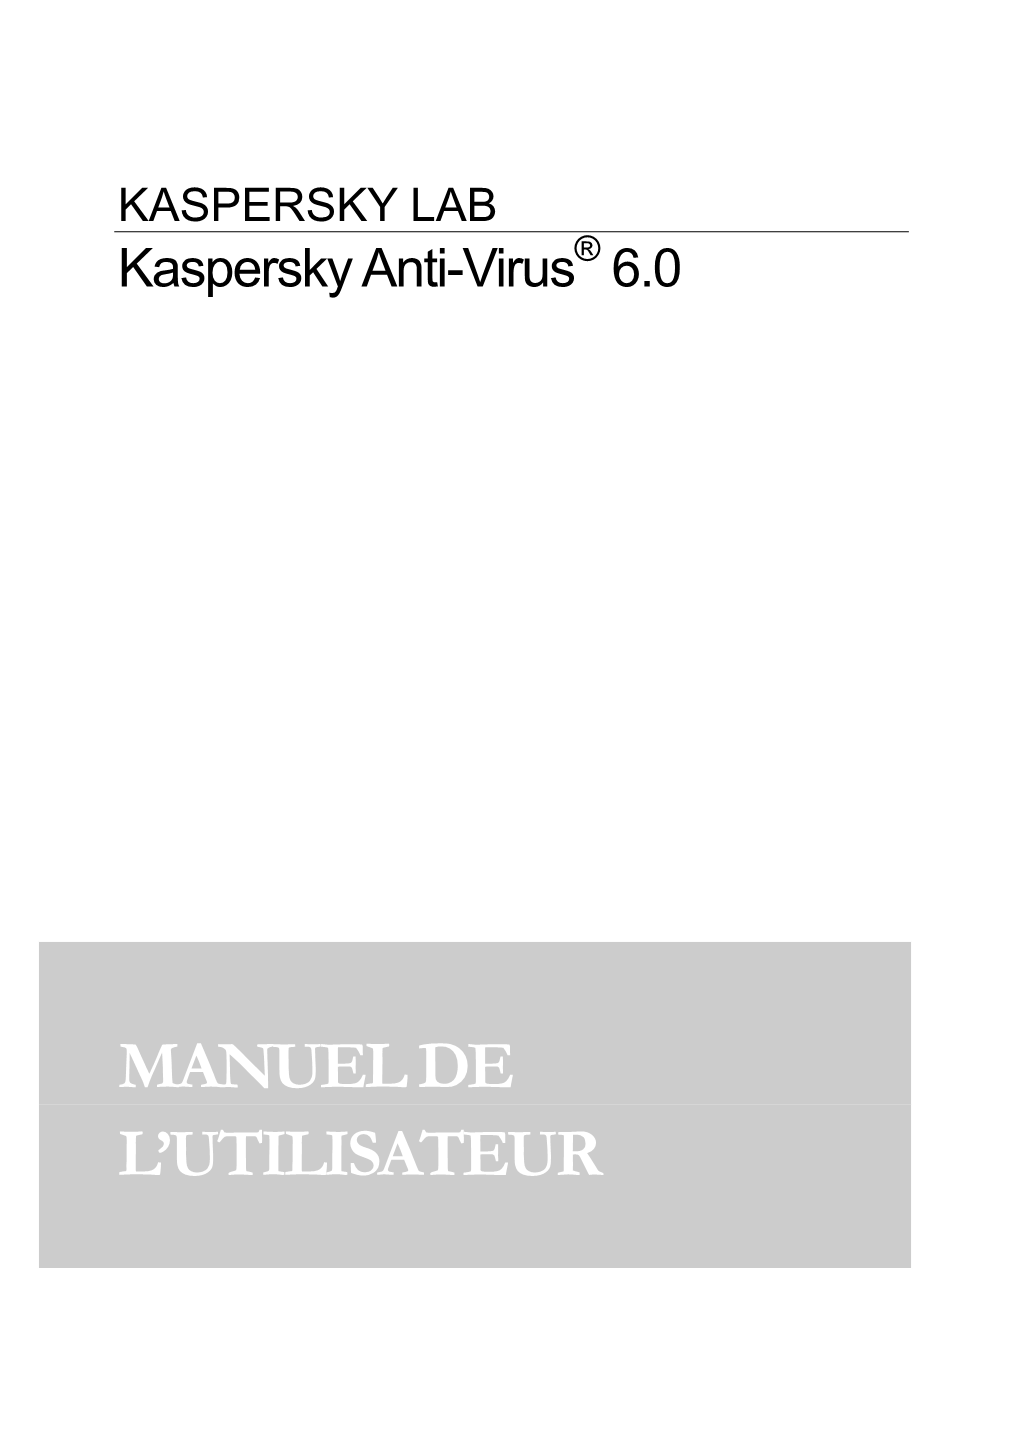 Kaspersky Anti-Virus® 6.0